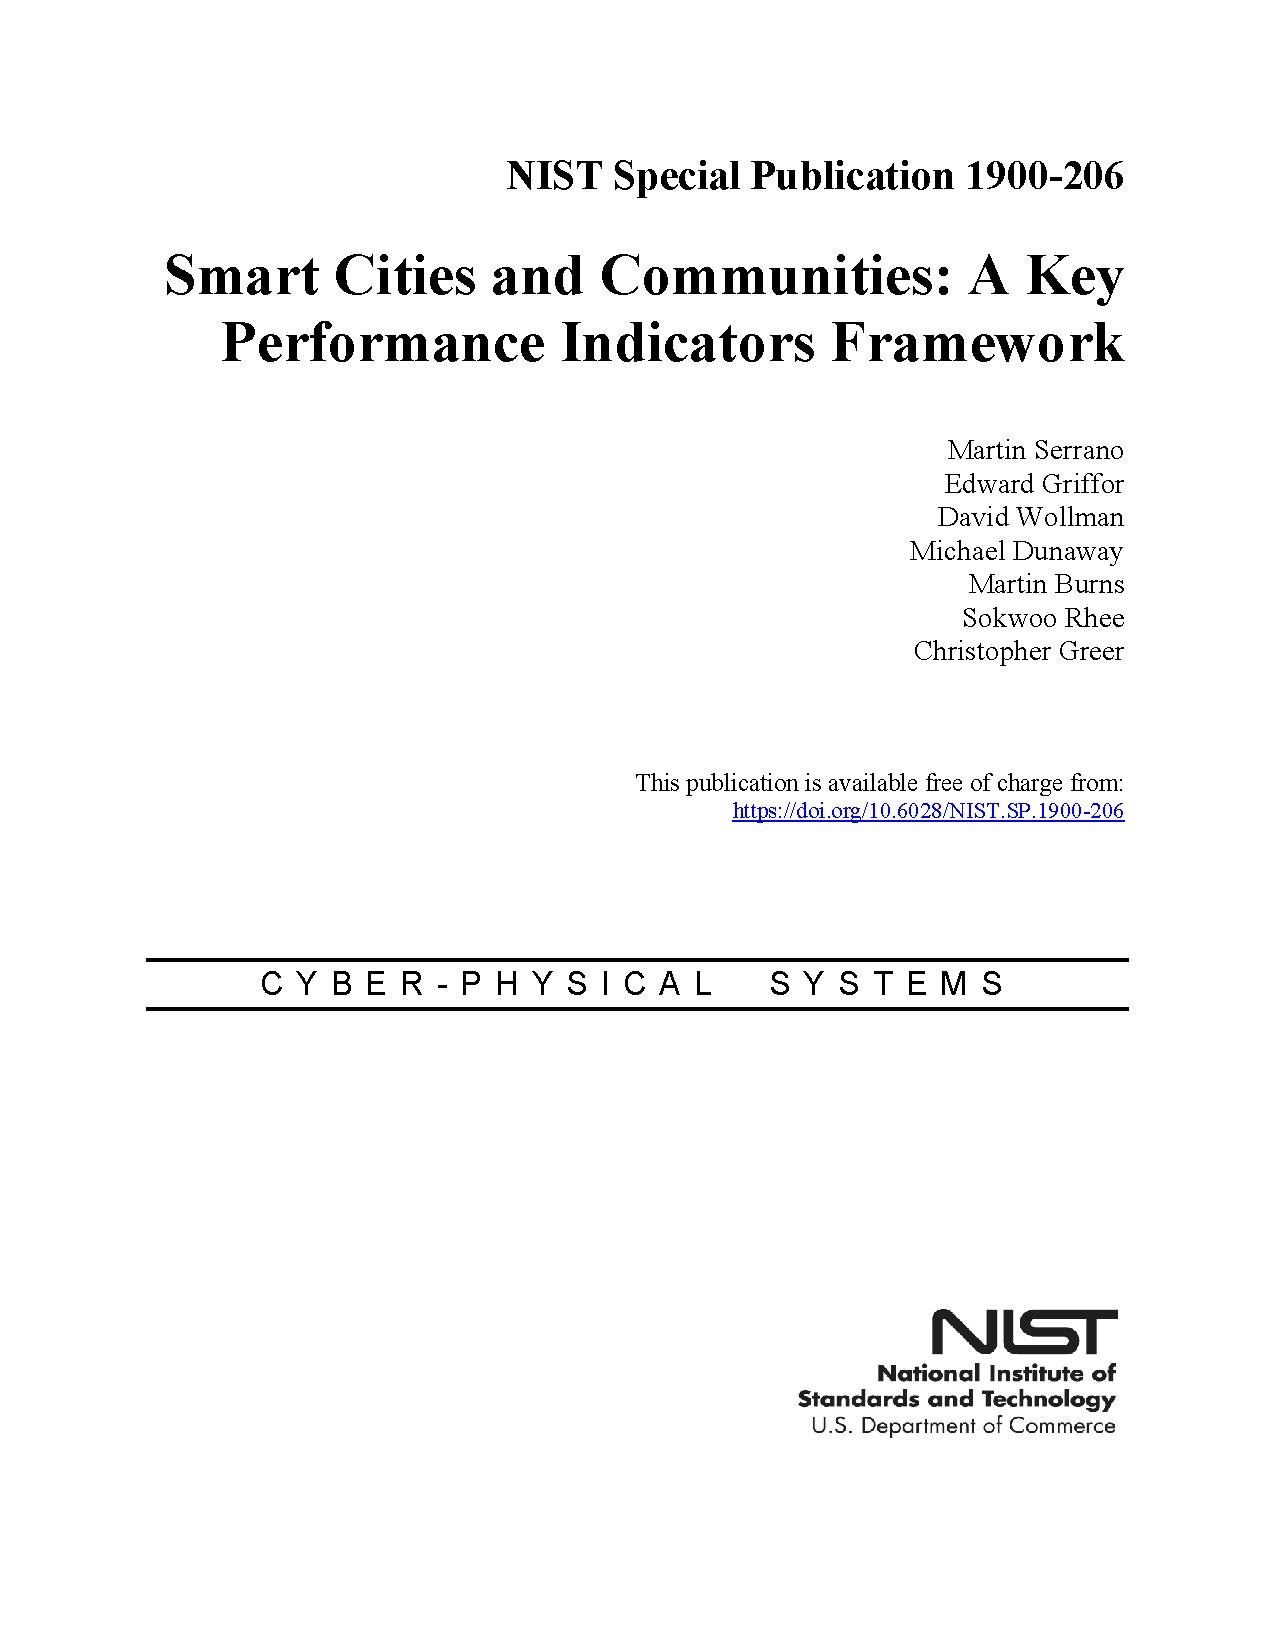 Smart Cities and Communities: Key Performance Indicators Framework